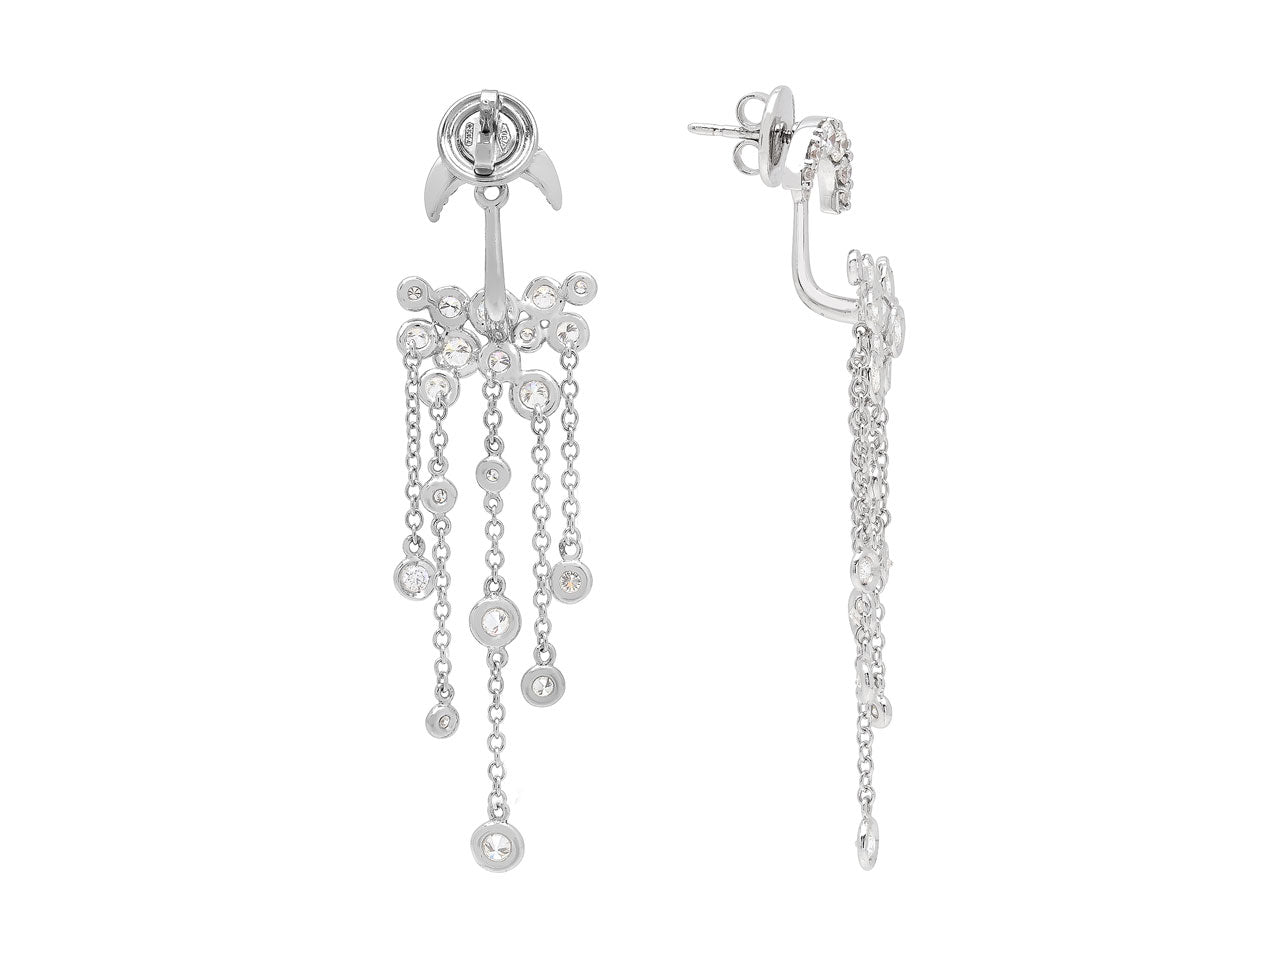 Giorgio Armani 'Firmamento' Diamond Earrings in 18K White Gold